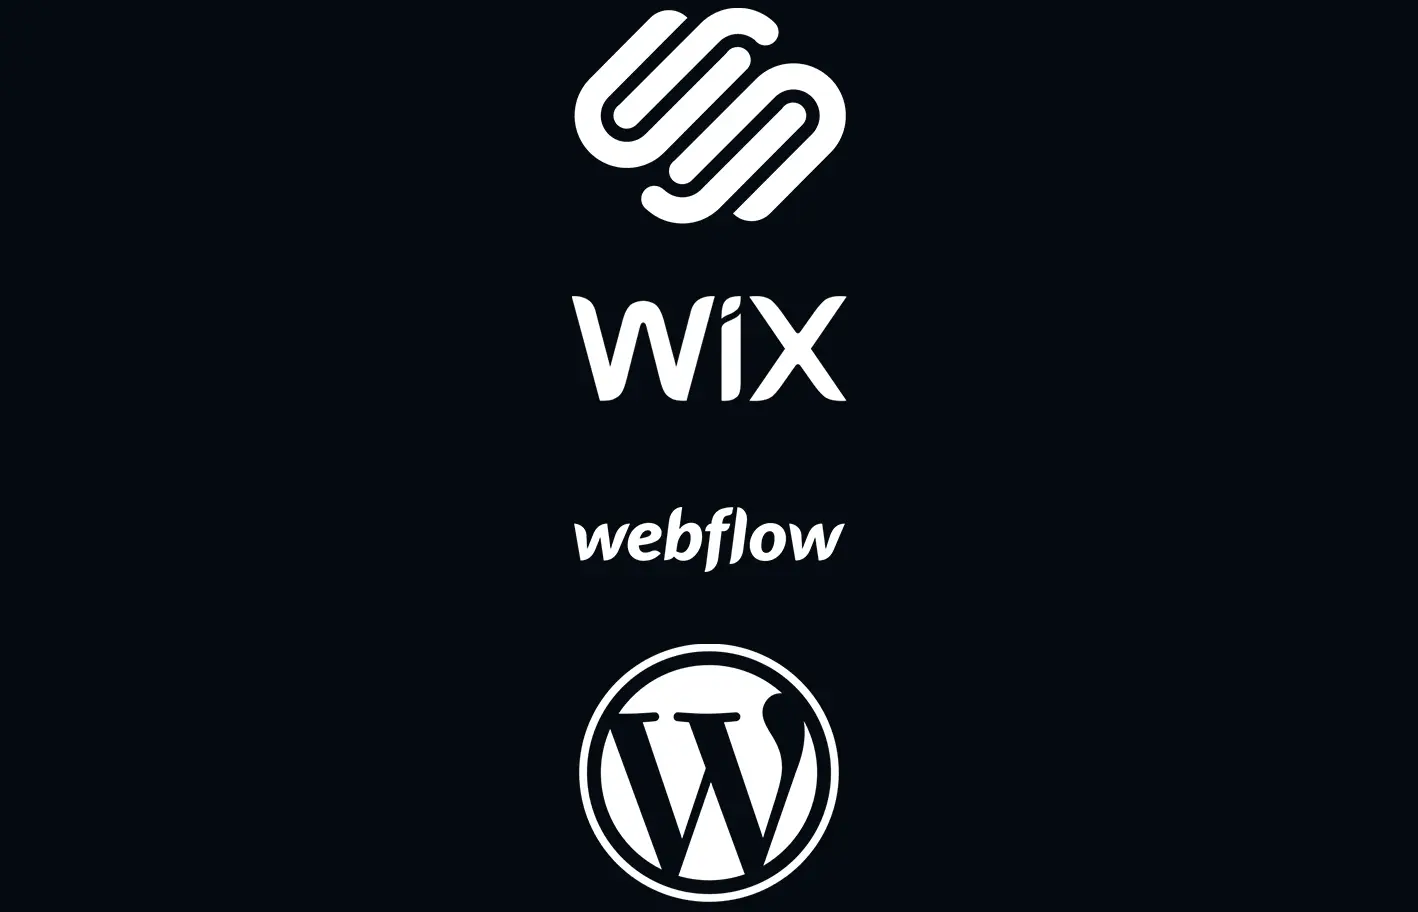 image shows logo of platform like Squarespace, Wix, Webflow and Wordpress